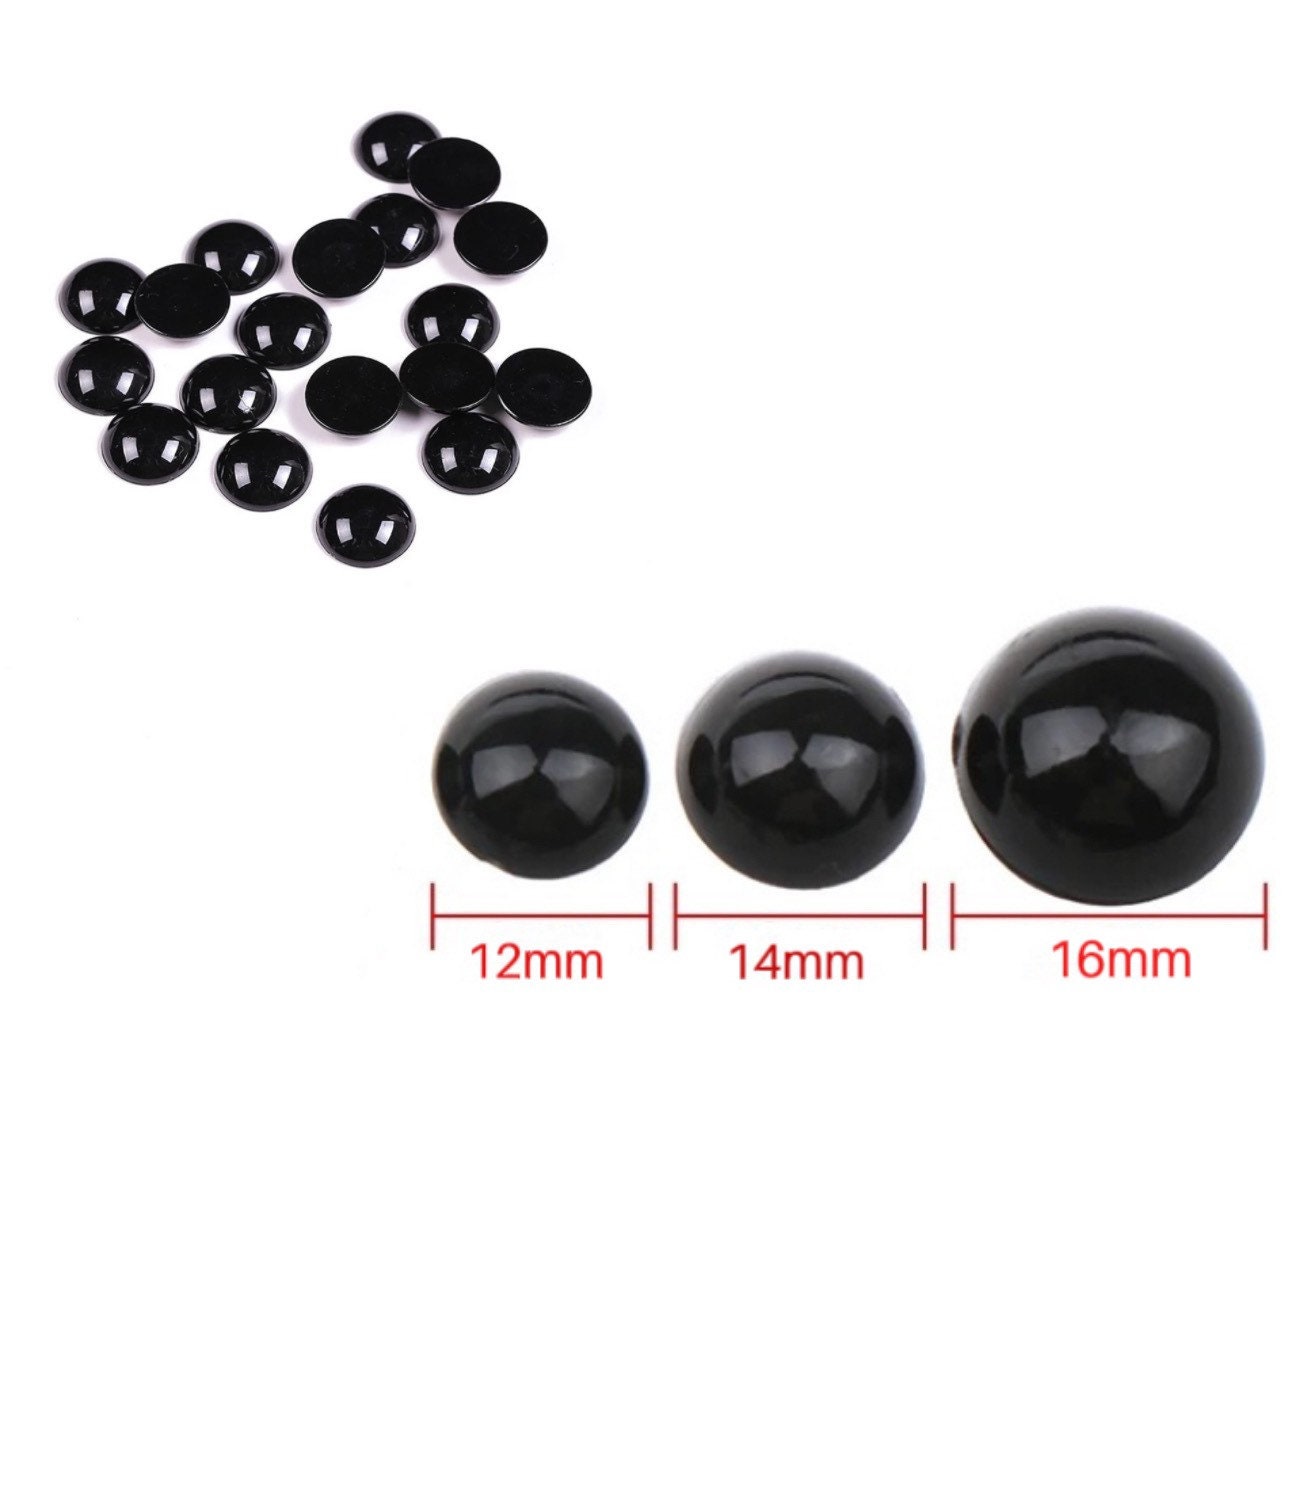 14mm Black Amigurumi Safety Eyes in Black Plastic for Doll